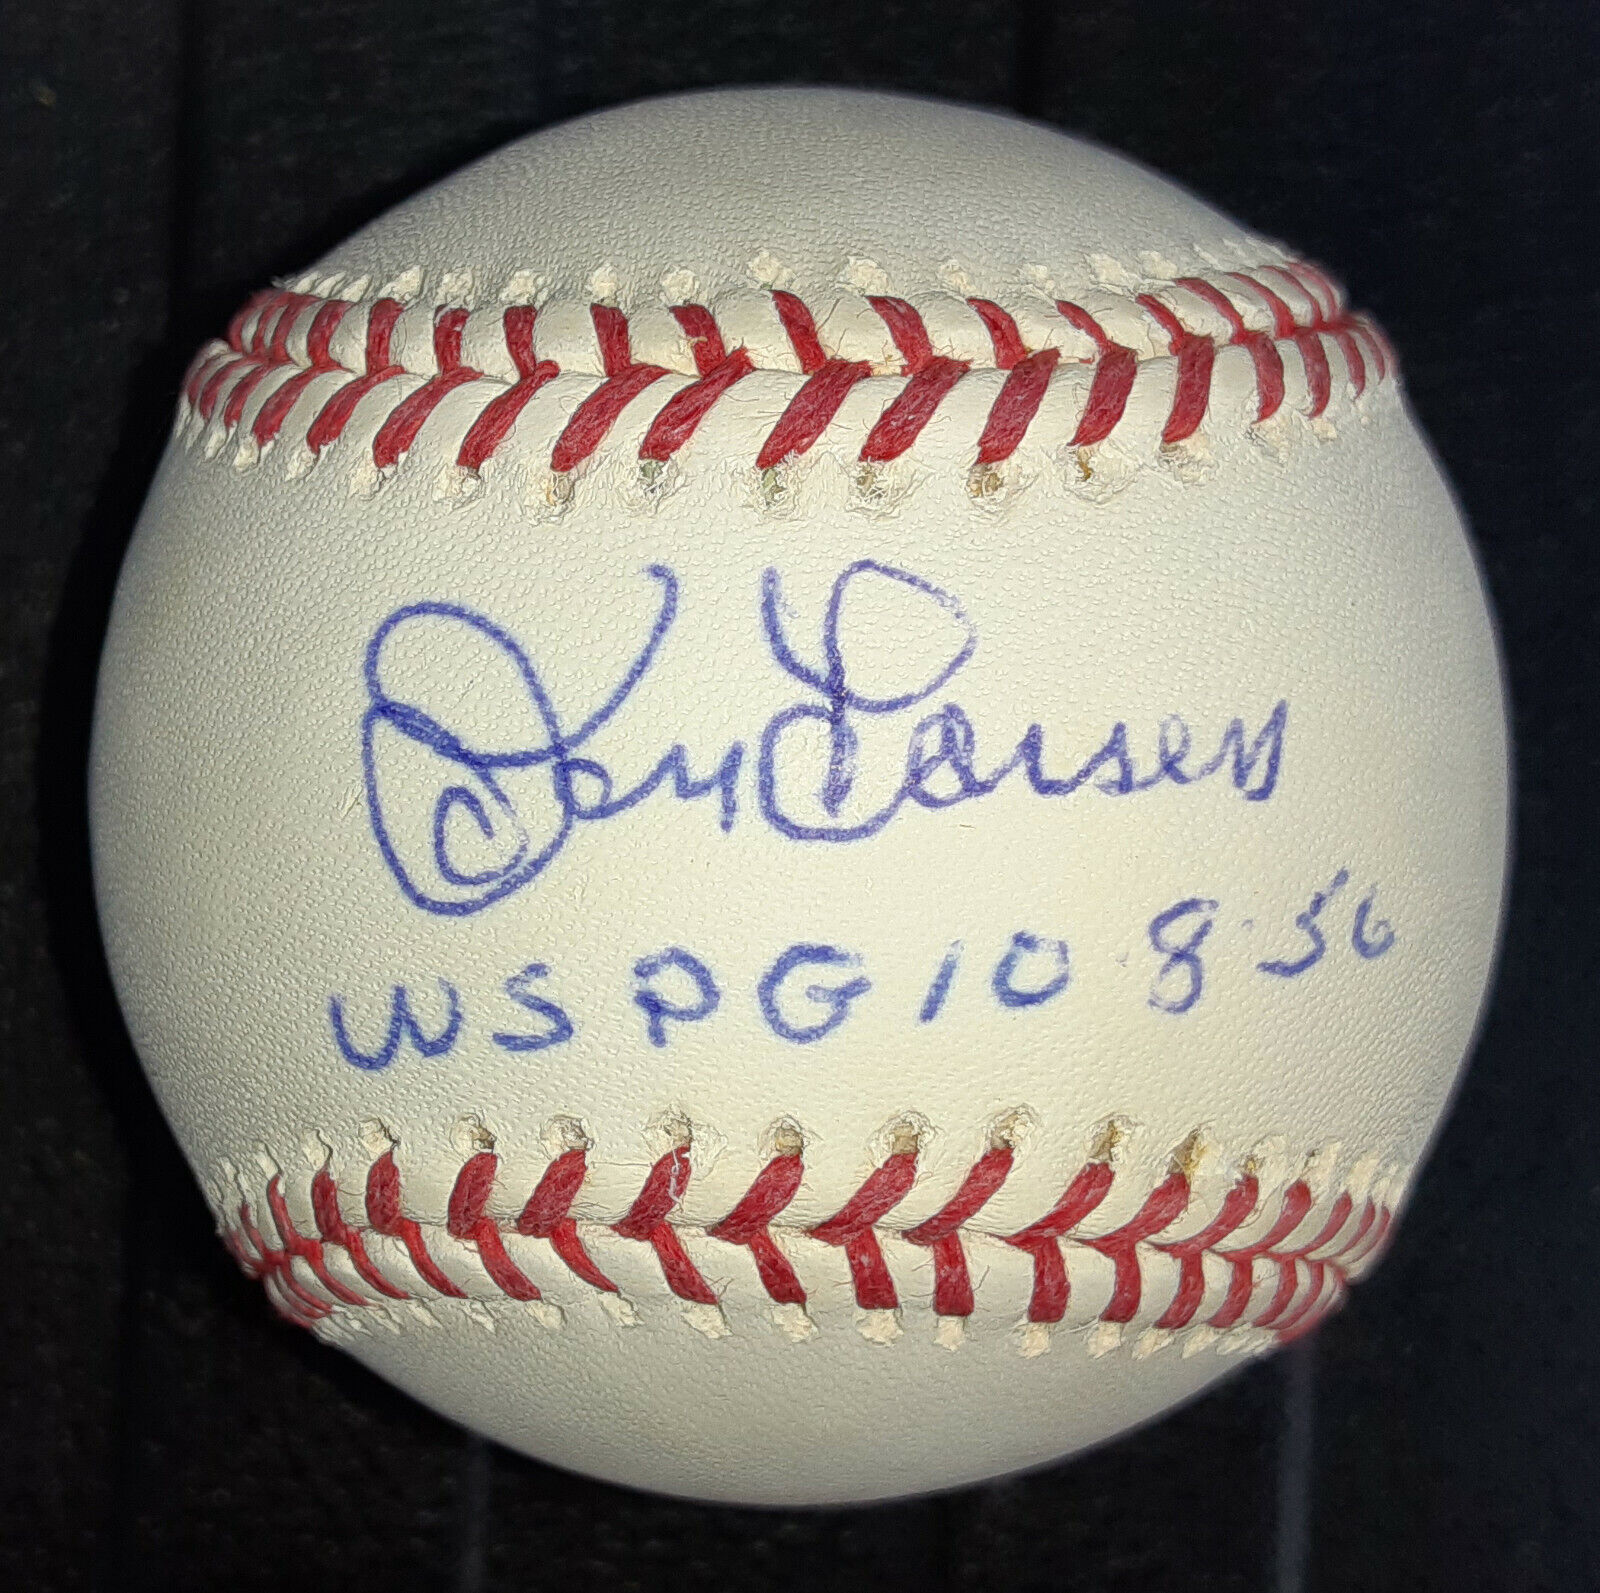 Don Larsen autographed authentic MLB baseball